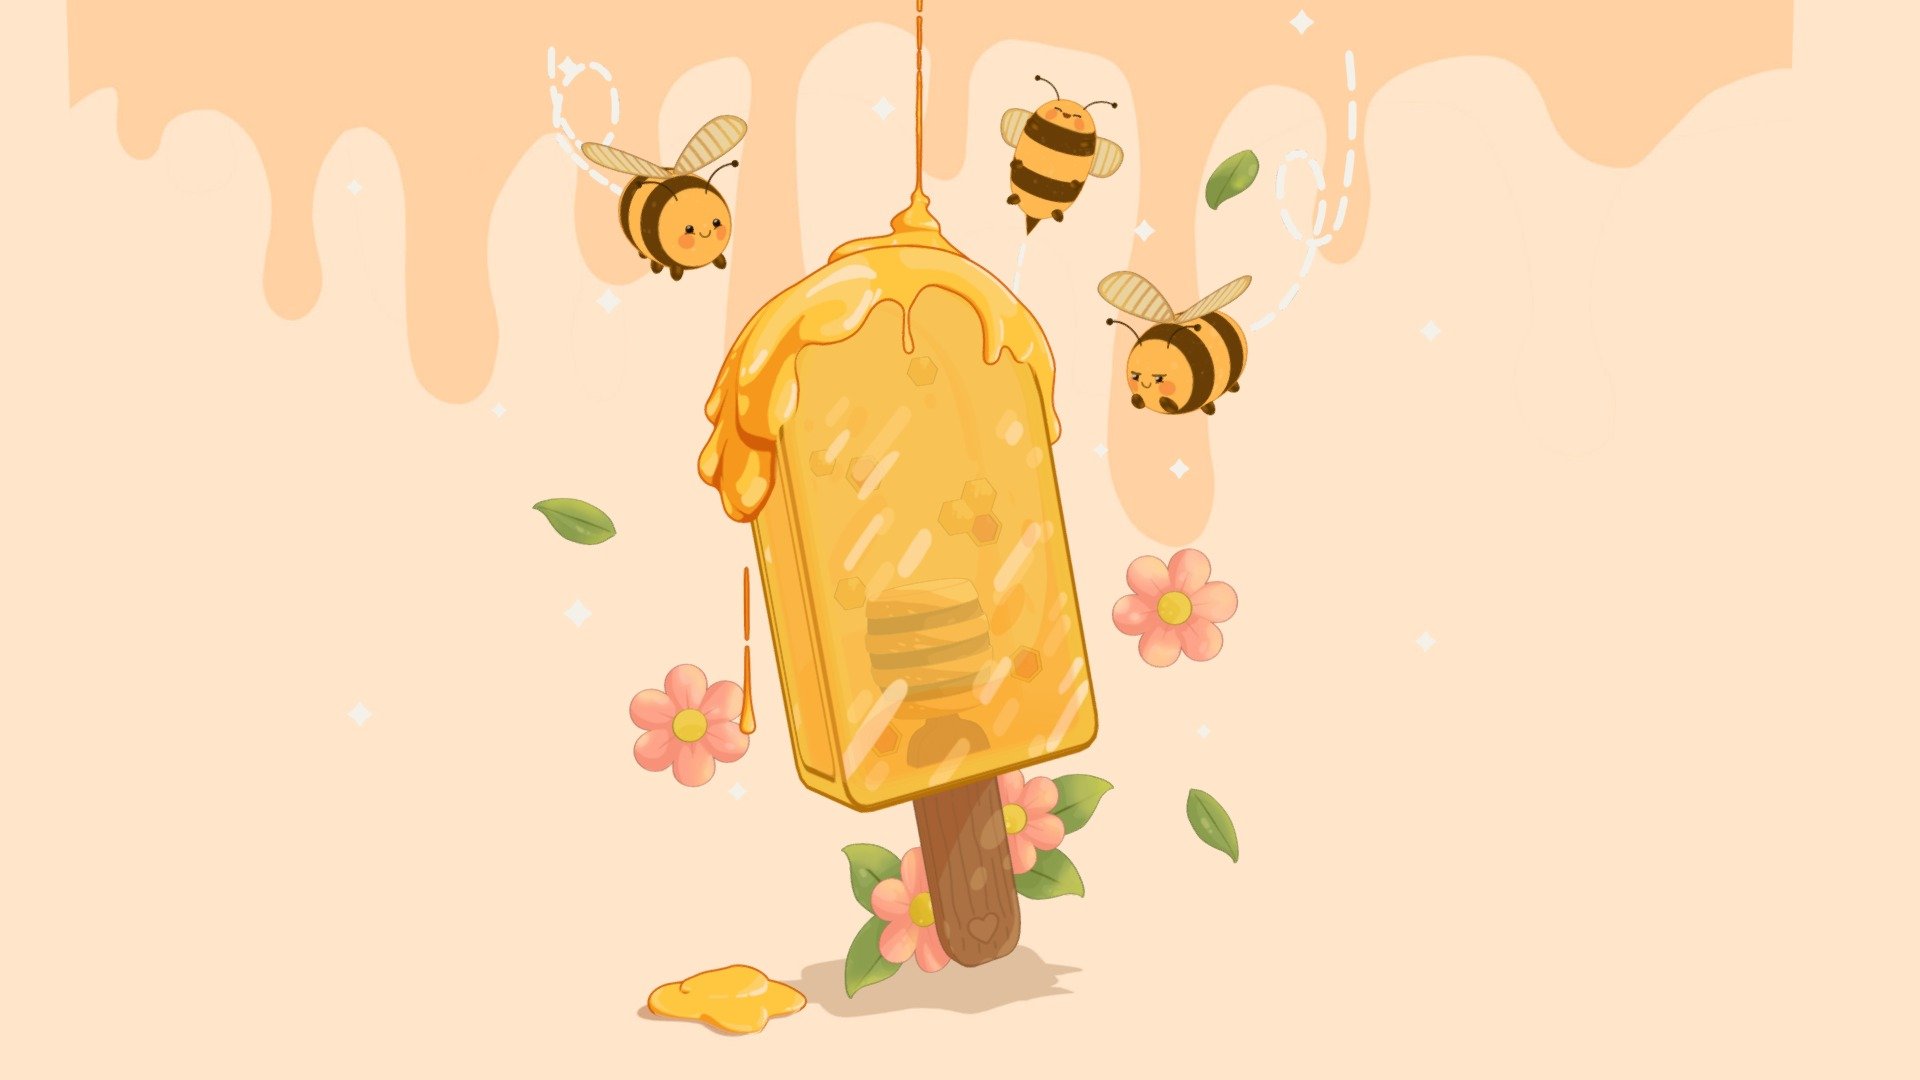 Honey Icecream
Original Art: https://www.instagram.com/p/Ccp24AxLsUL/?igshid=MDJmNzVkMjY= - Honey Icecream - 3D model by popup_0509 3d model